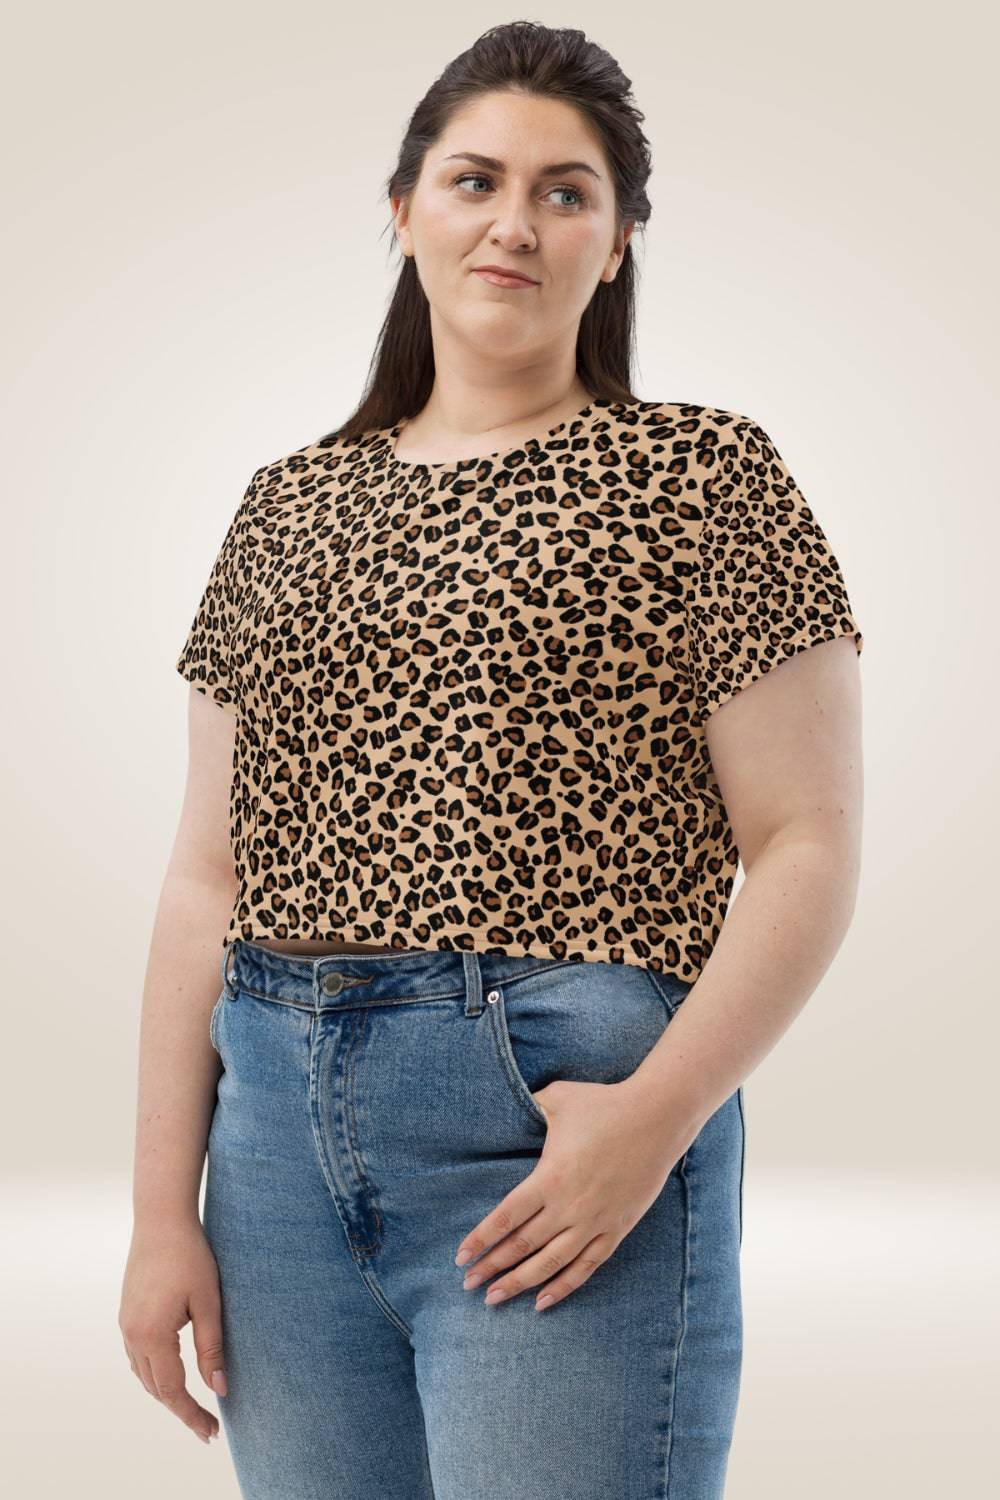 Leopard Print Crop Top T Shirt - TGC Boutique - Crop Top